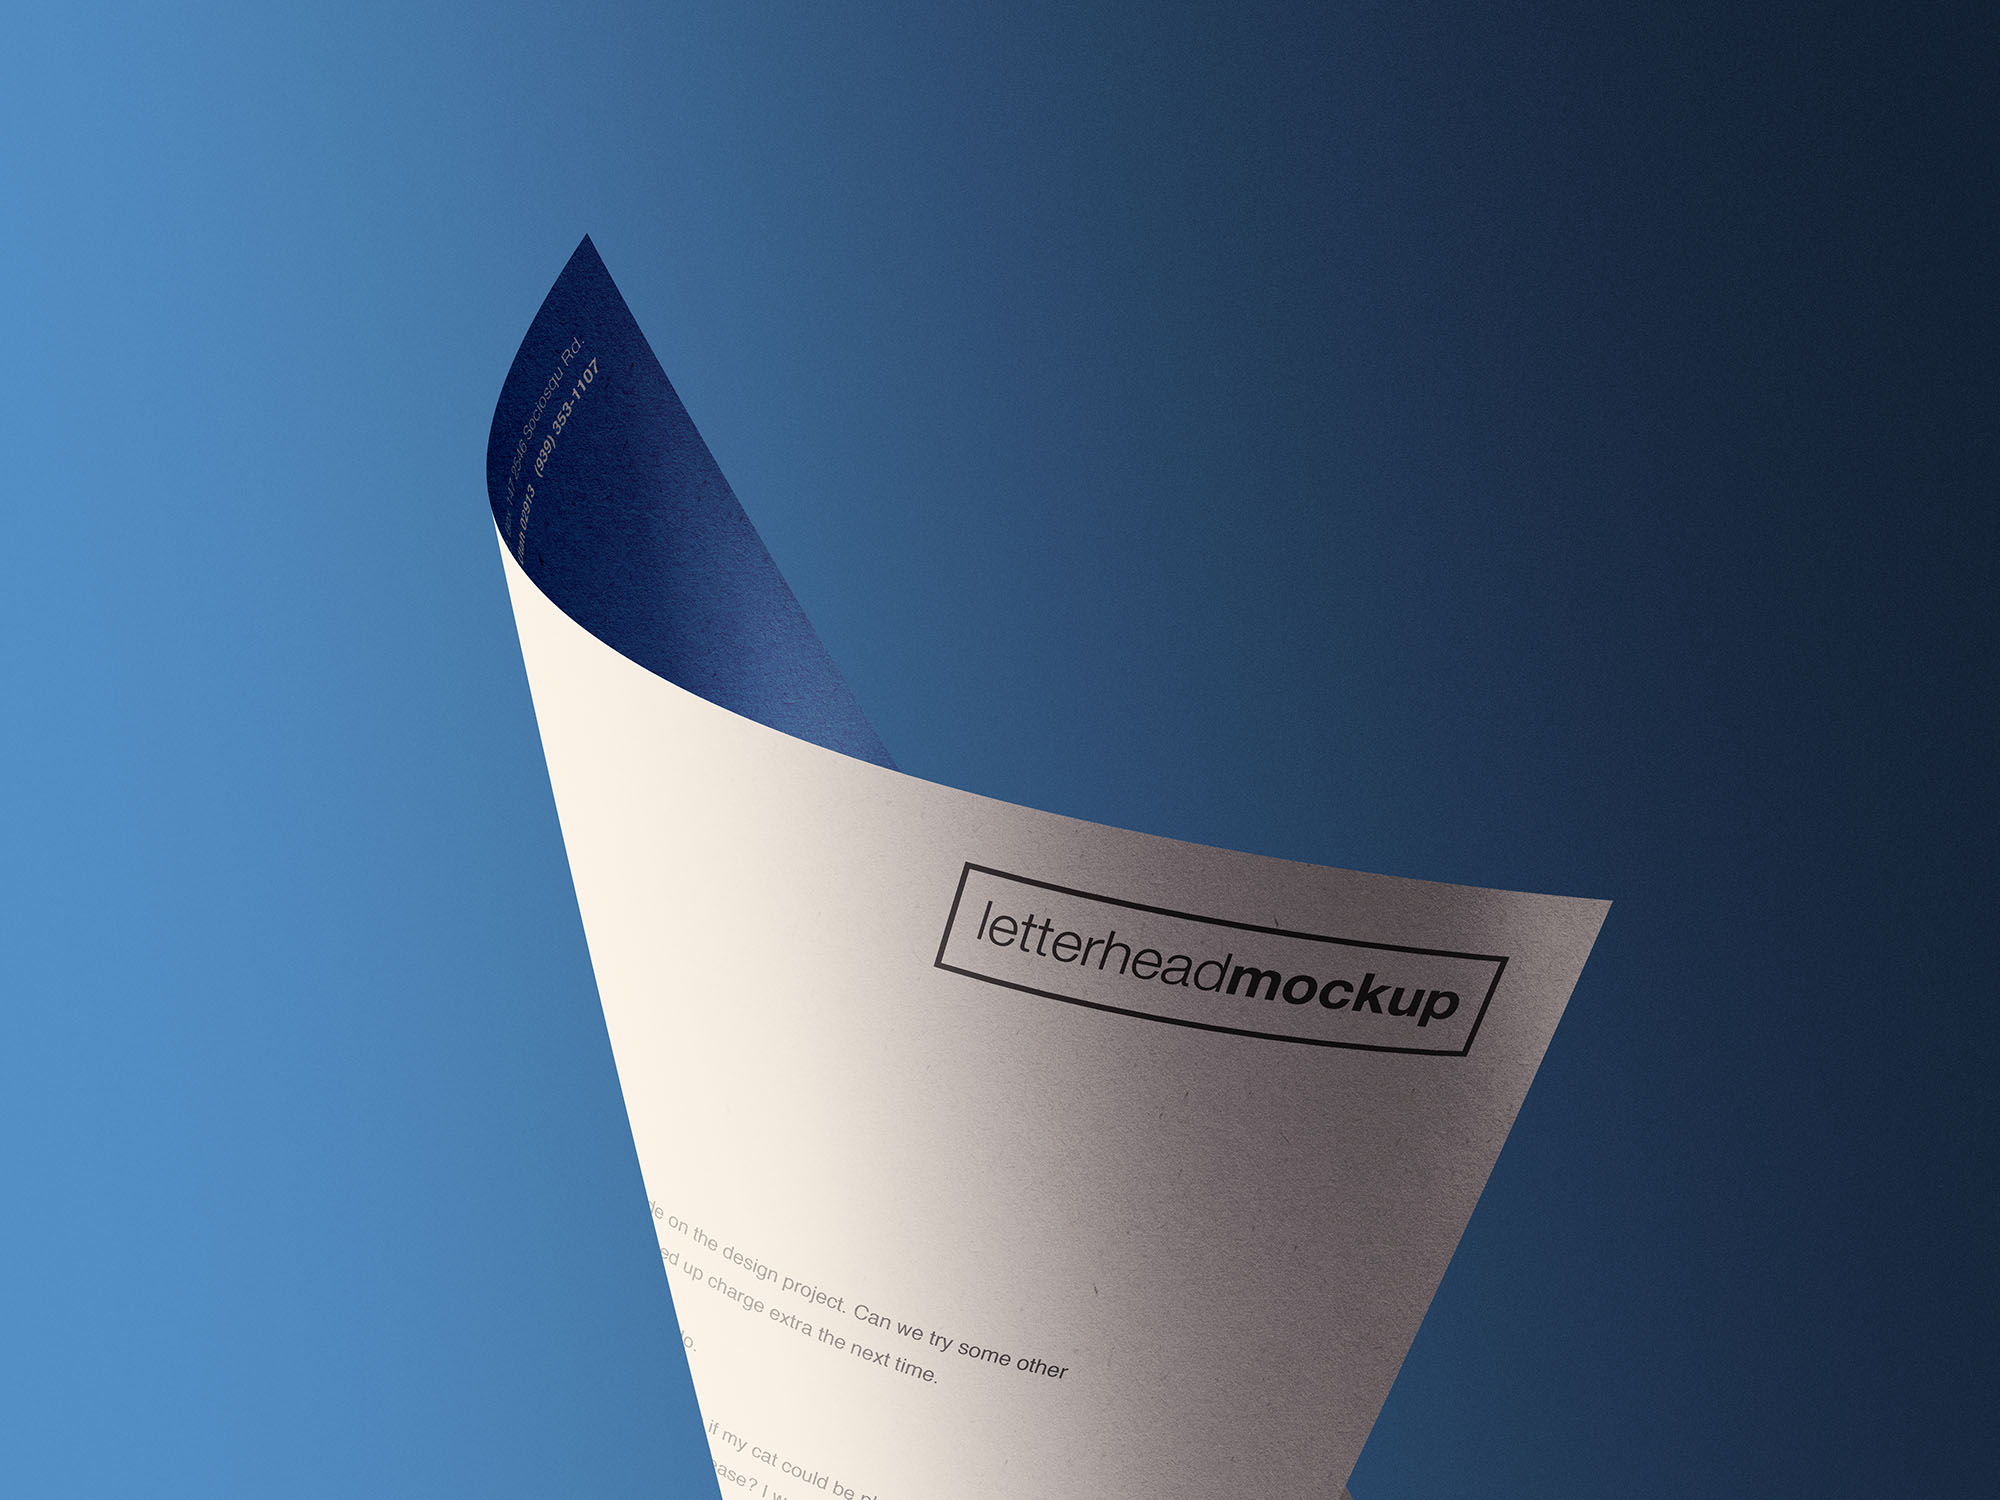 卷曲状态A4企业信纸设计效果样机模板 Curled A4 Letterhead Paper Mockup插图